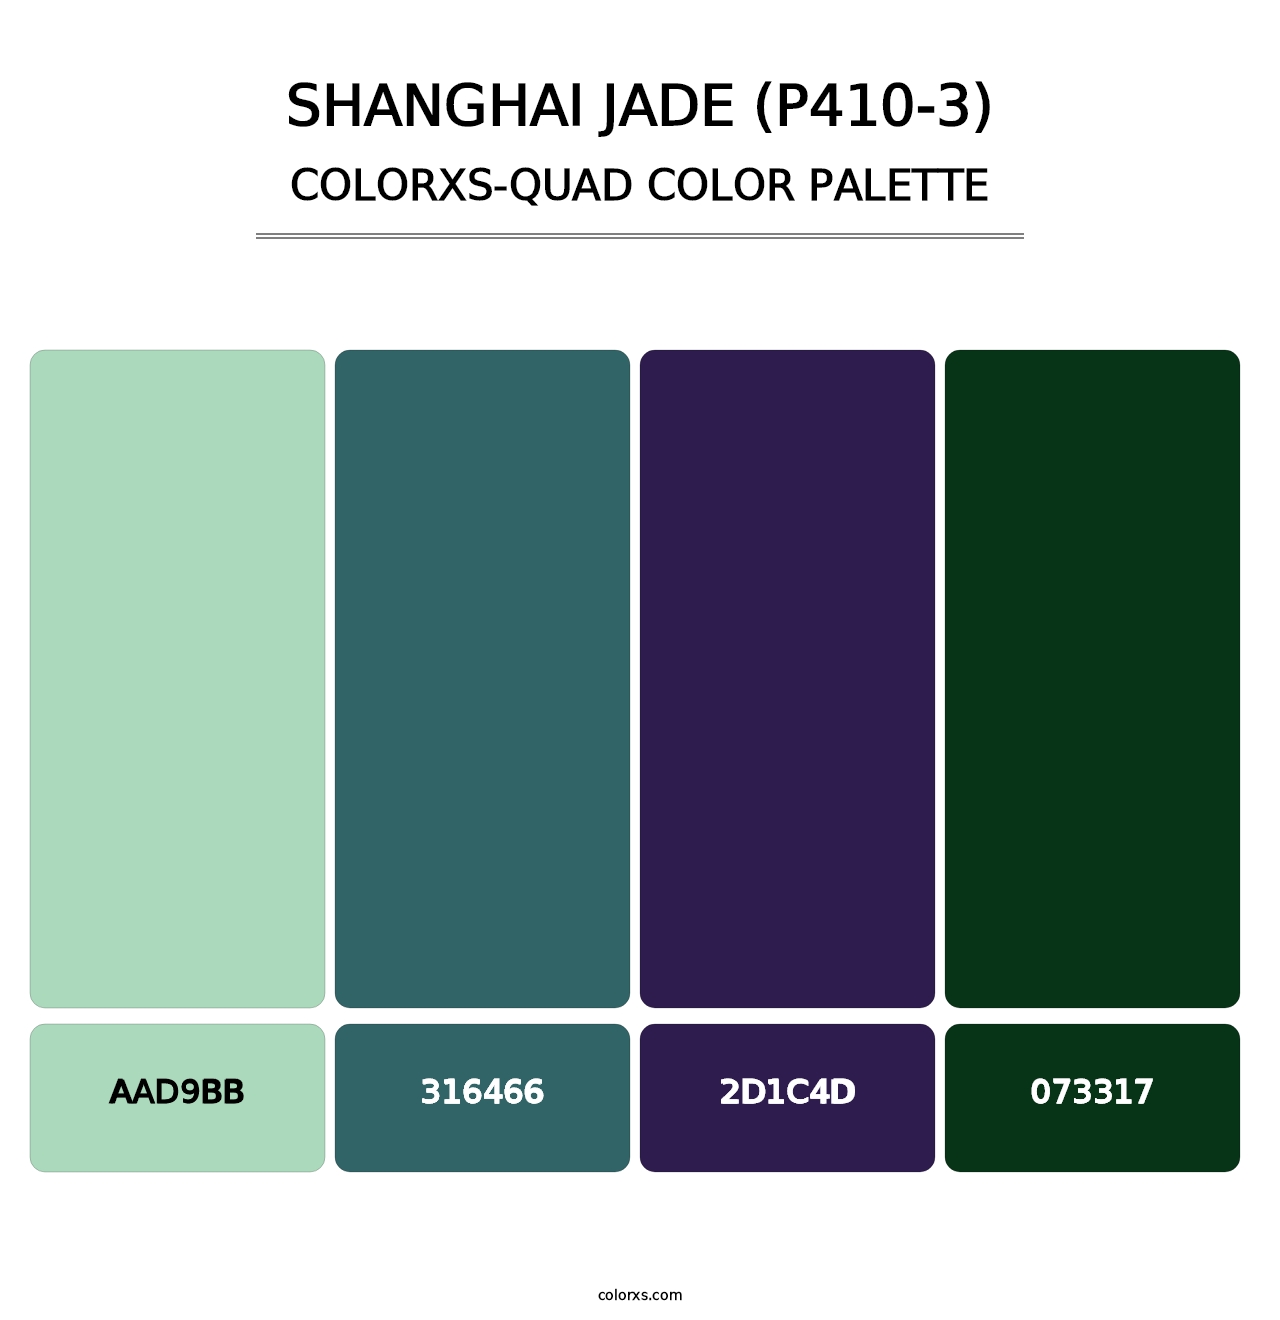 Shanghai Jade (P410-3) - Colorxs Quad Palette